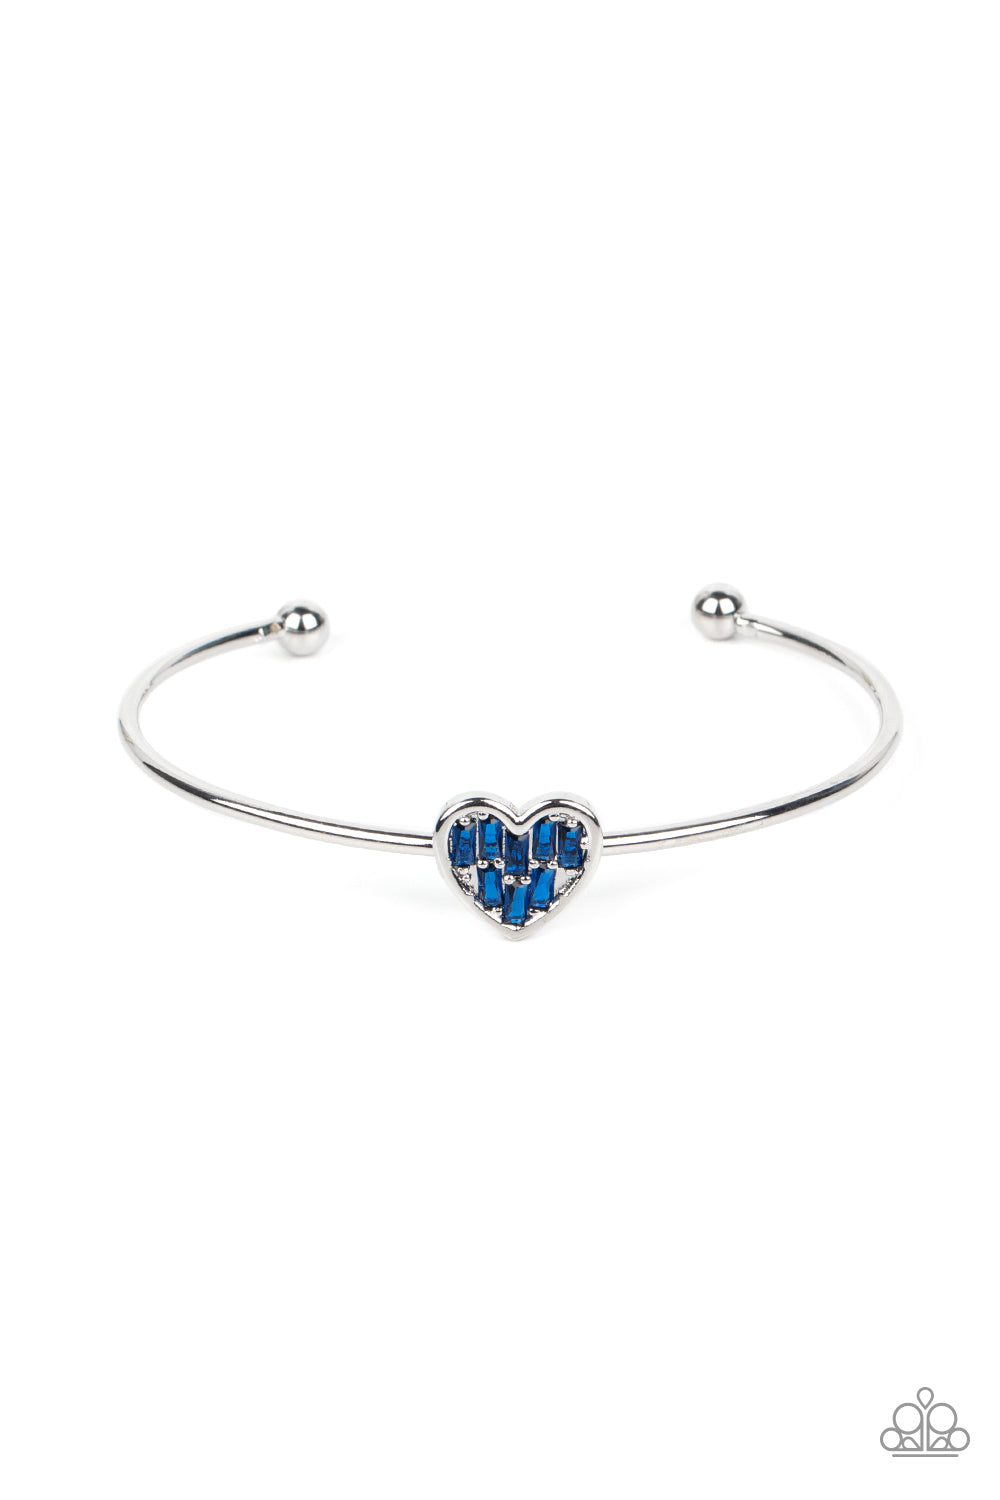 Heart of Ice - Blue Bracelet - Princess Glam Shop